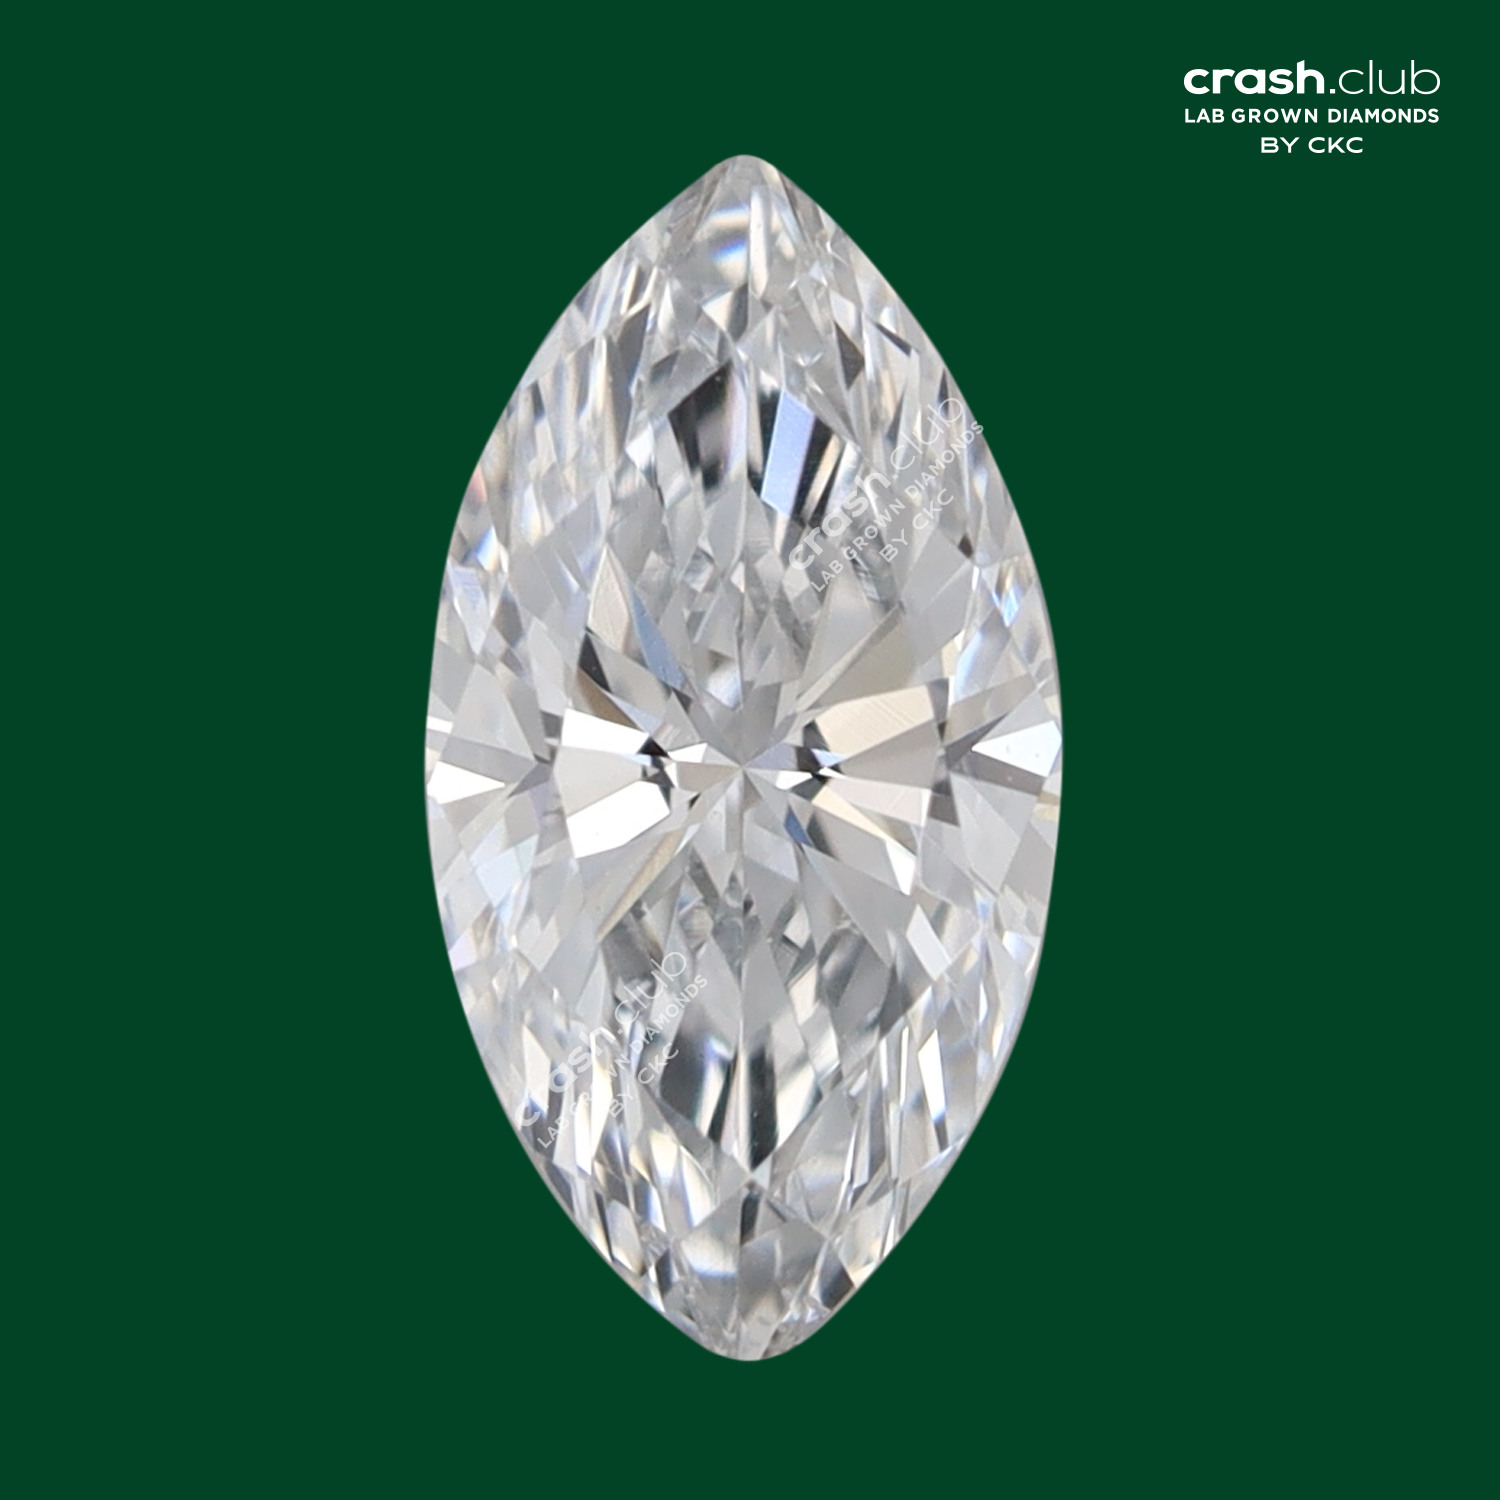 marquise cut 0.24 carats lab grown Diamond- Crash Club by CKC